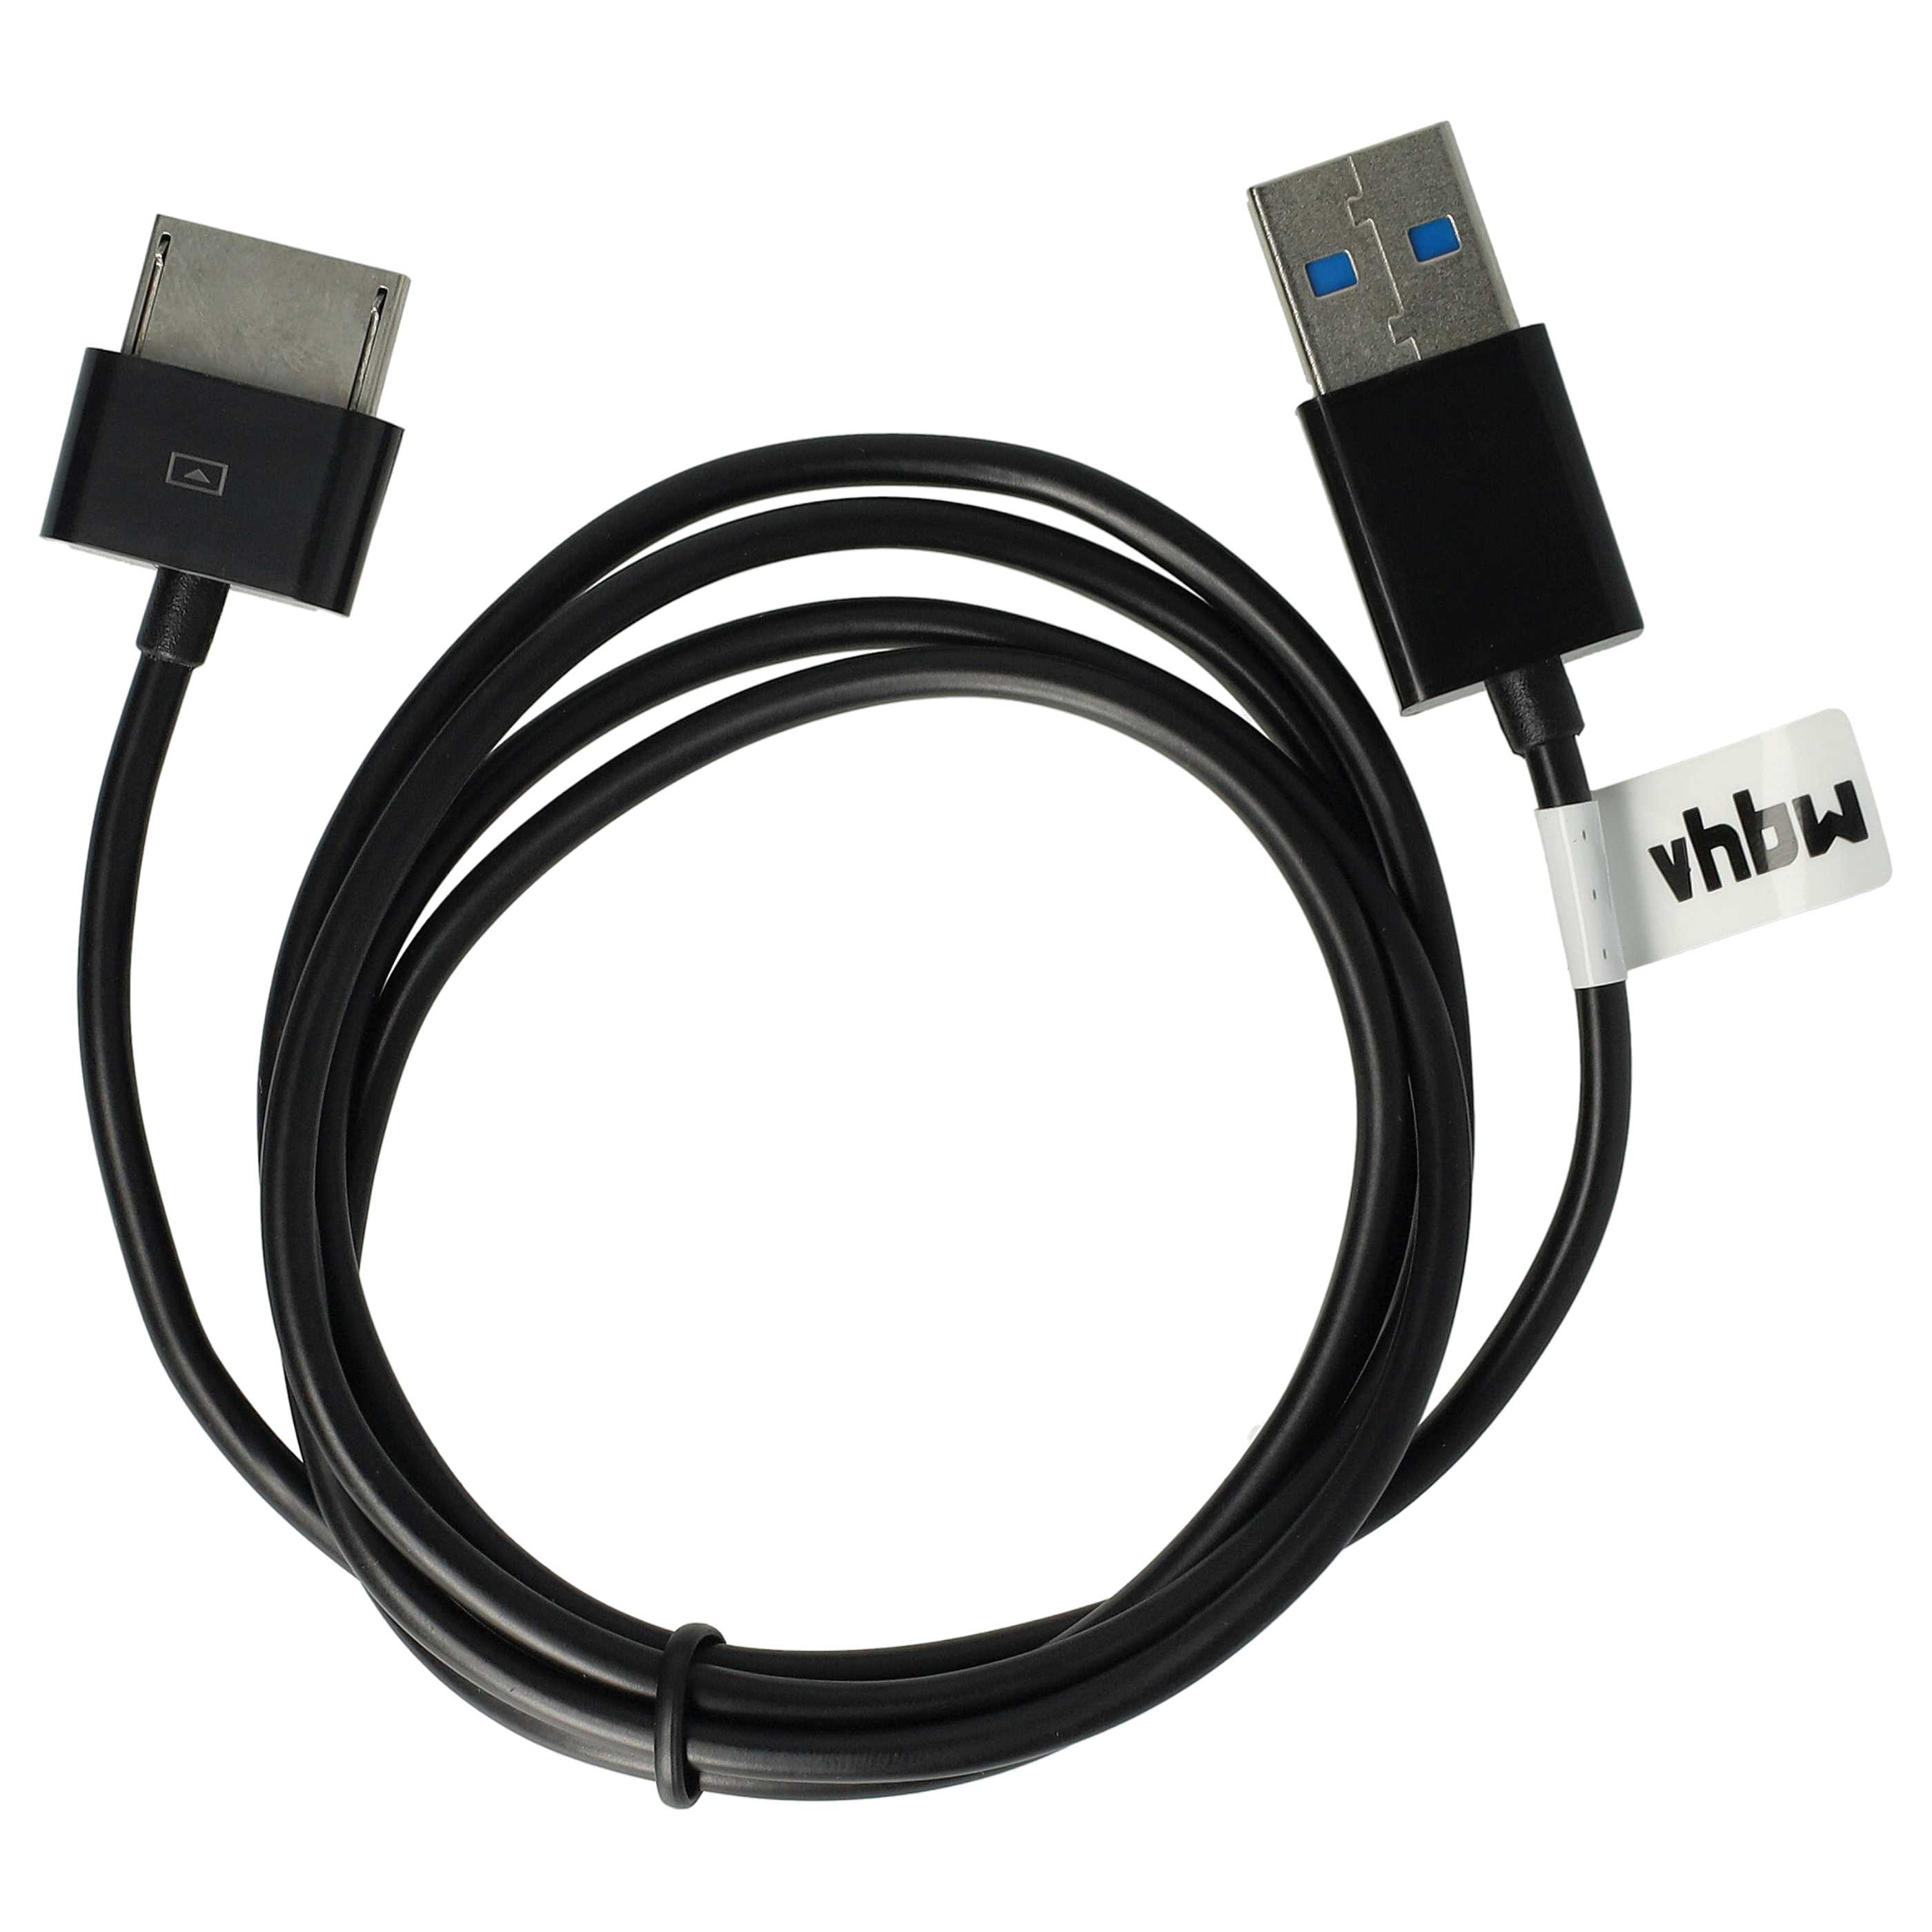 USB Datenkabel passend für Asus Transformer Pad Infinity Tablet - 2in1 Ladekabel - 100cm